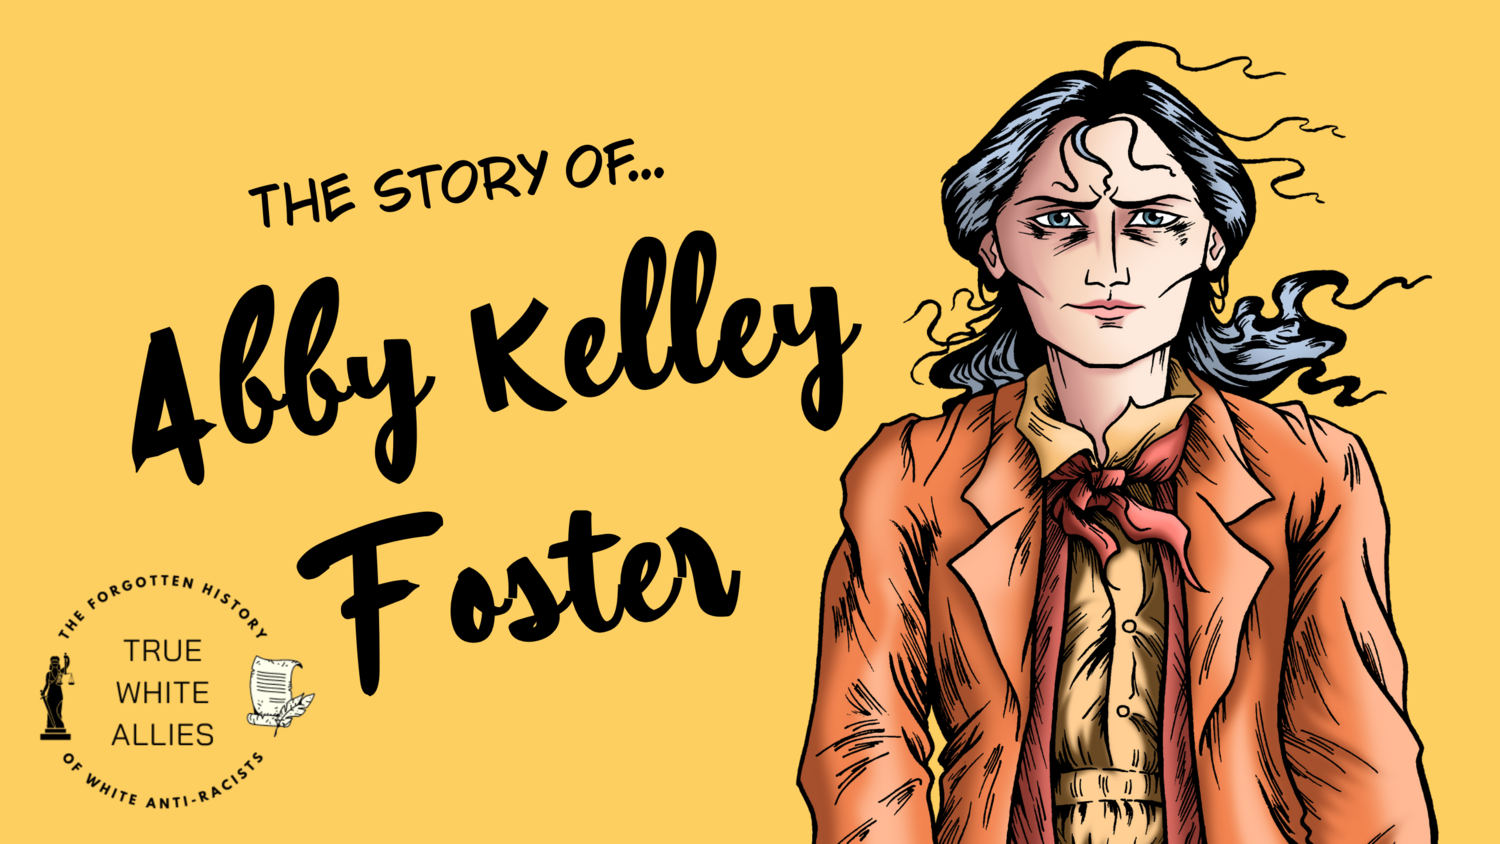 Foster, Abby Kelley